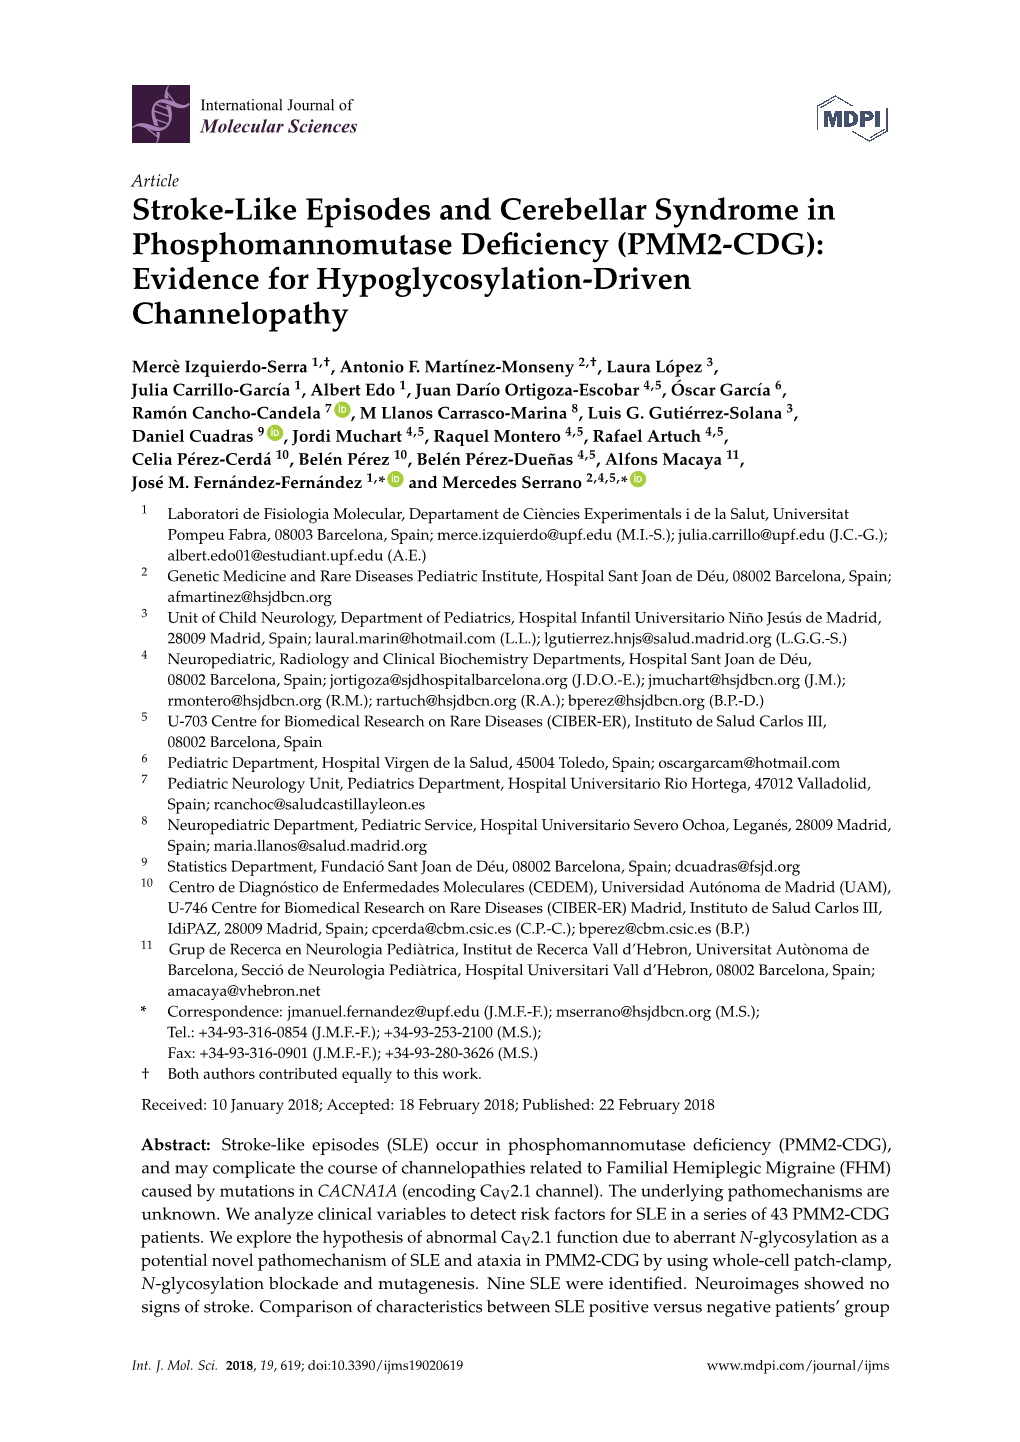 (PMM2-CDG): Evidence for Hypoglycosylation-Driven Channelopathy